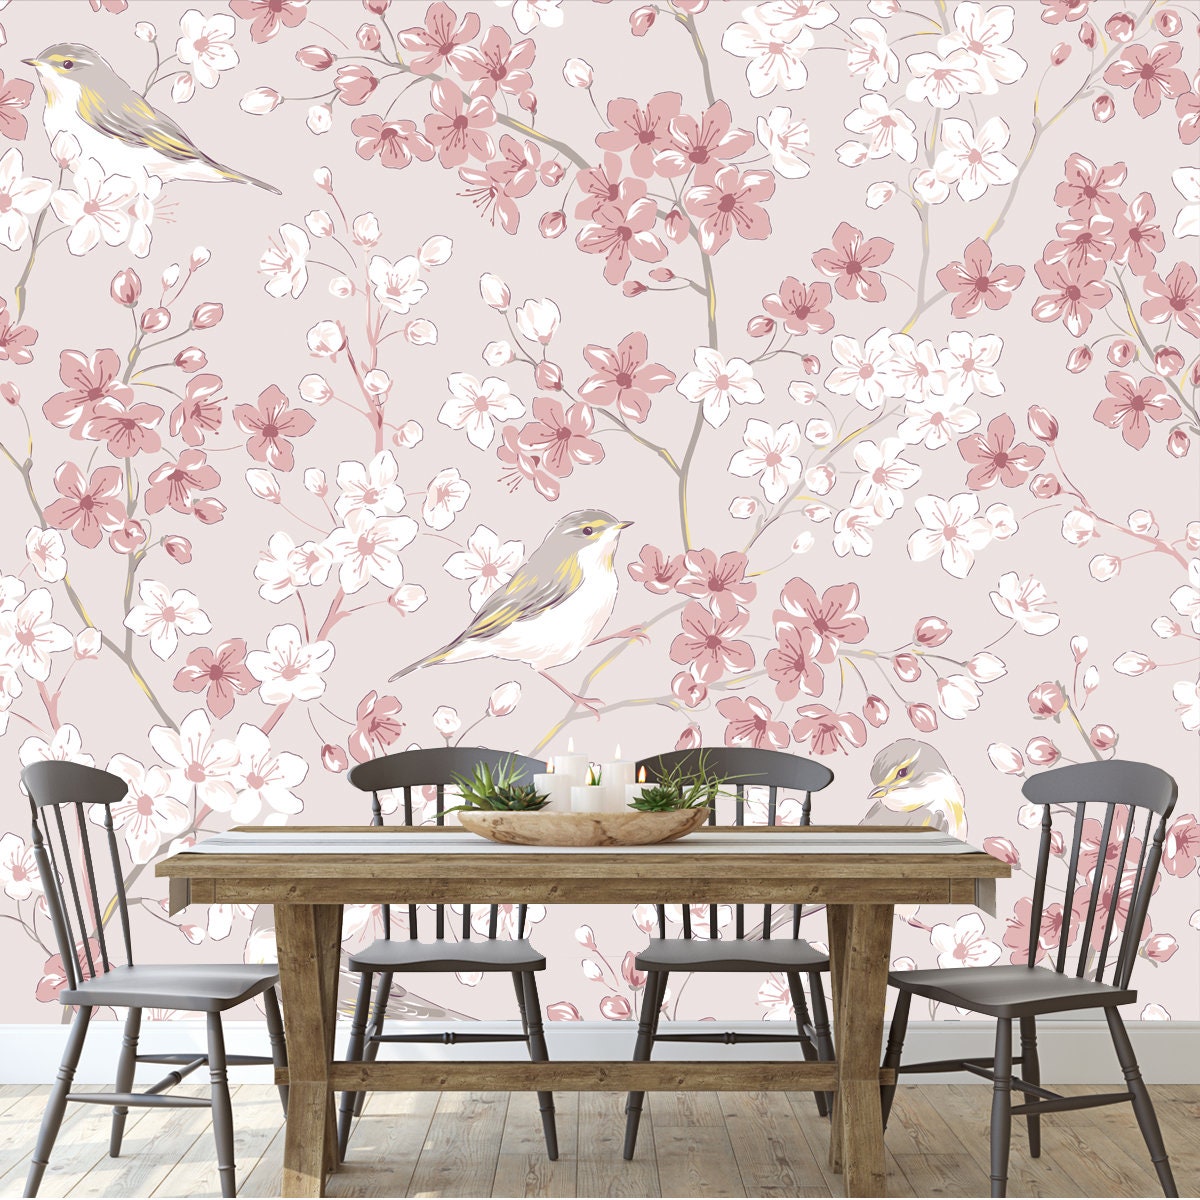 Willow Warbler Bird in Spring Sakura Cherry Blossom Garden. Vintage Romantic Nature Hand Drawn Print Wallpaper Dining Room Mural